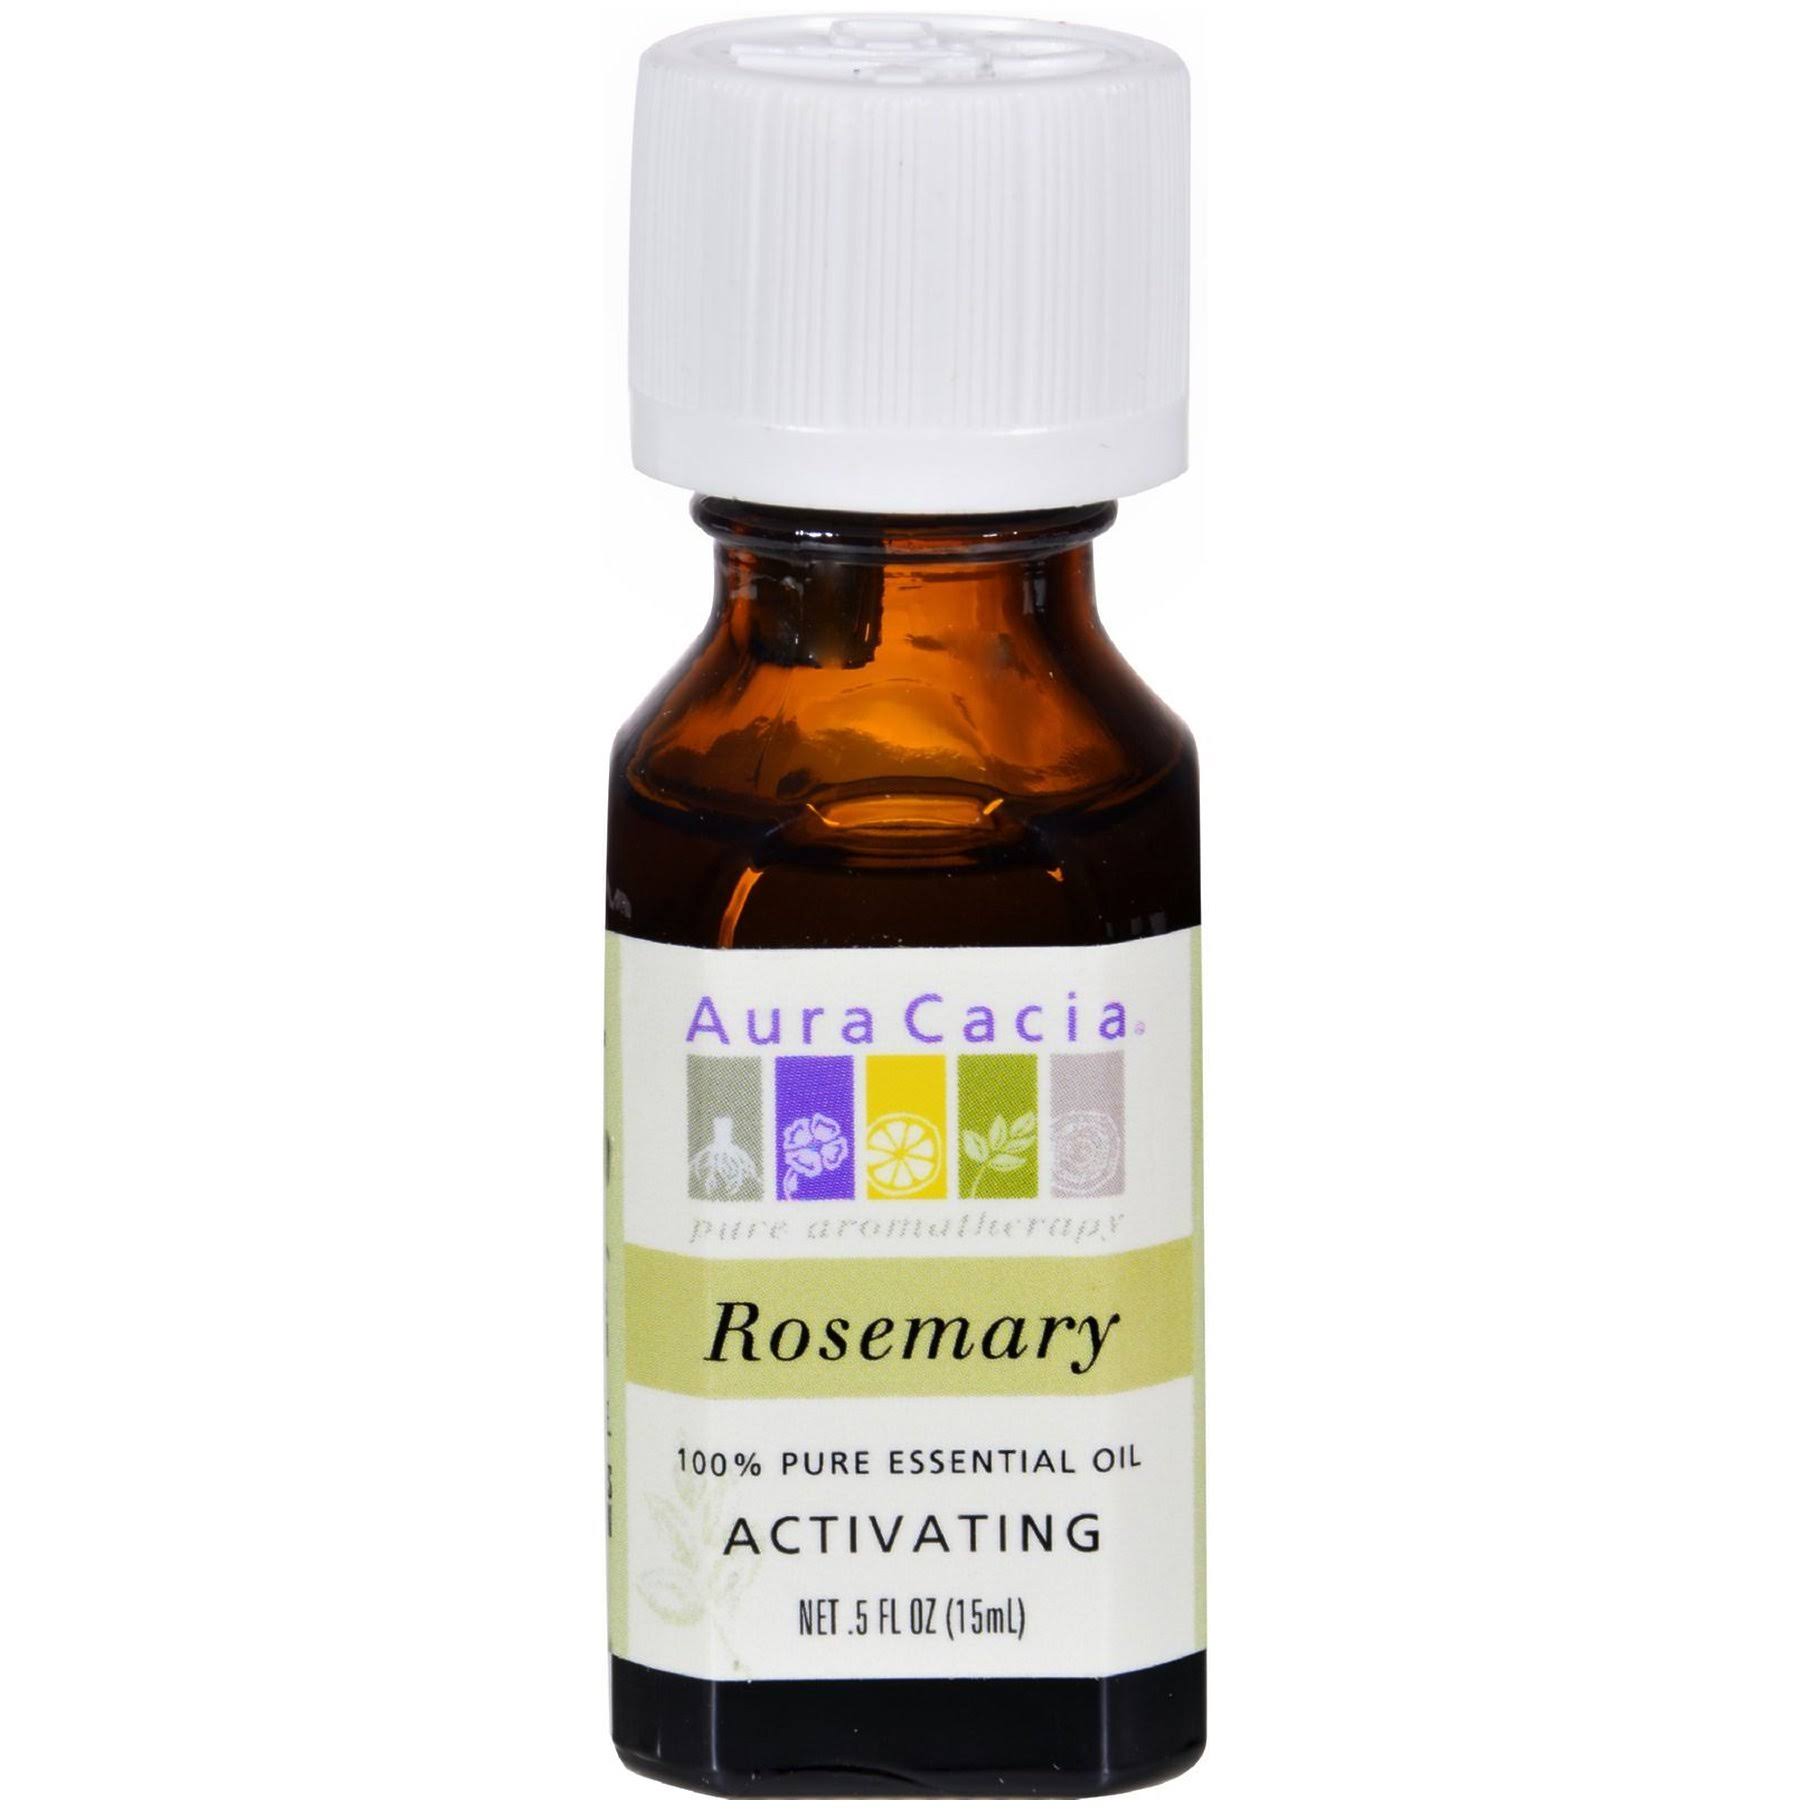 Aura Cacia Pure Essential Oil - Rosemary